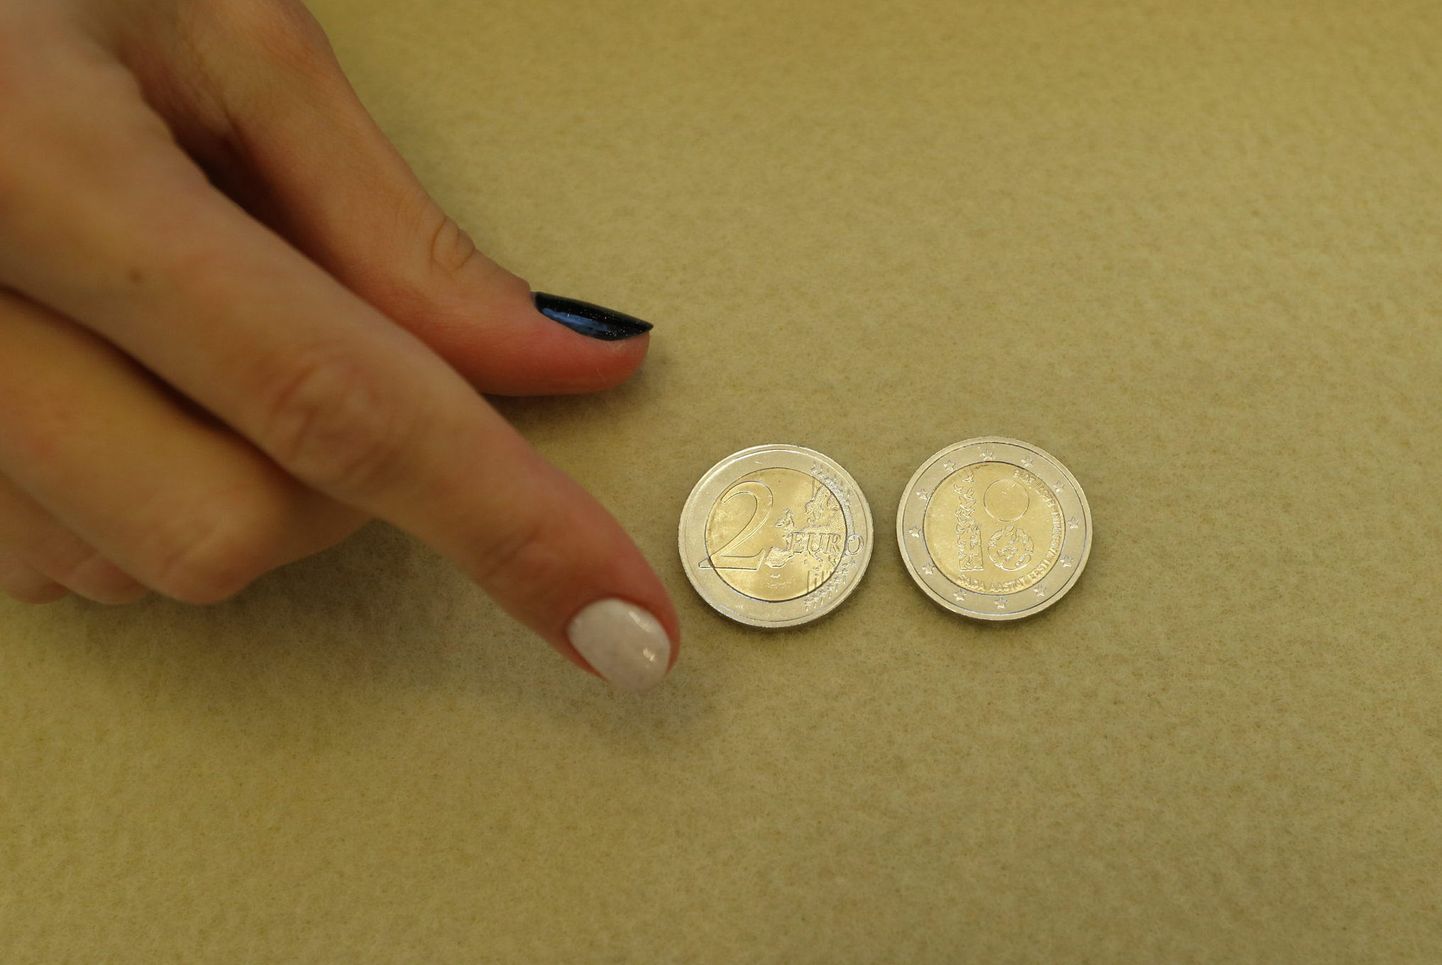 2-eurone münt.